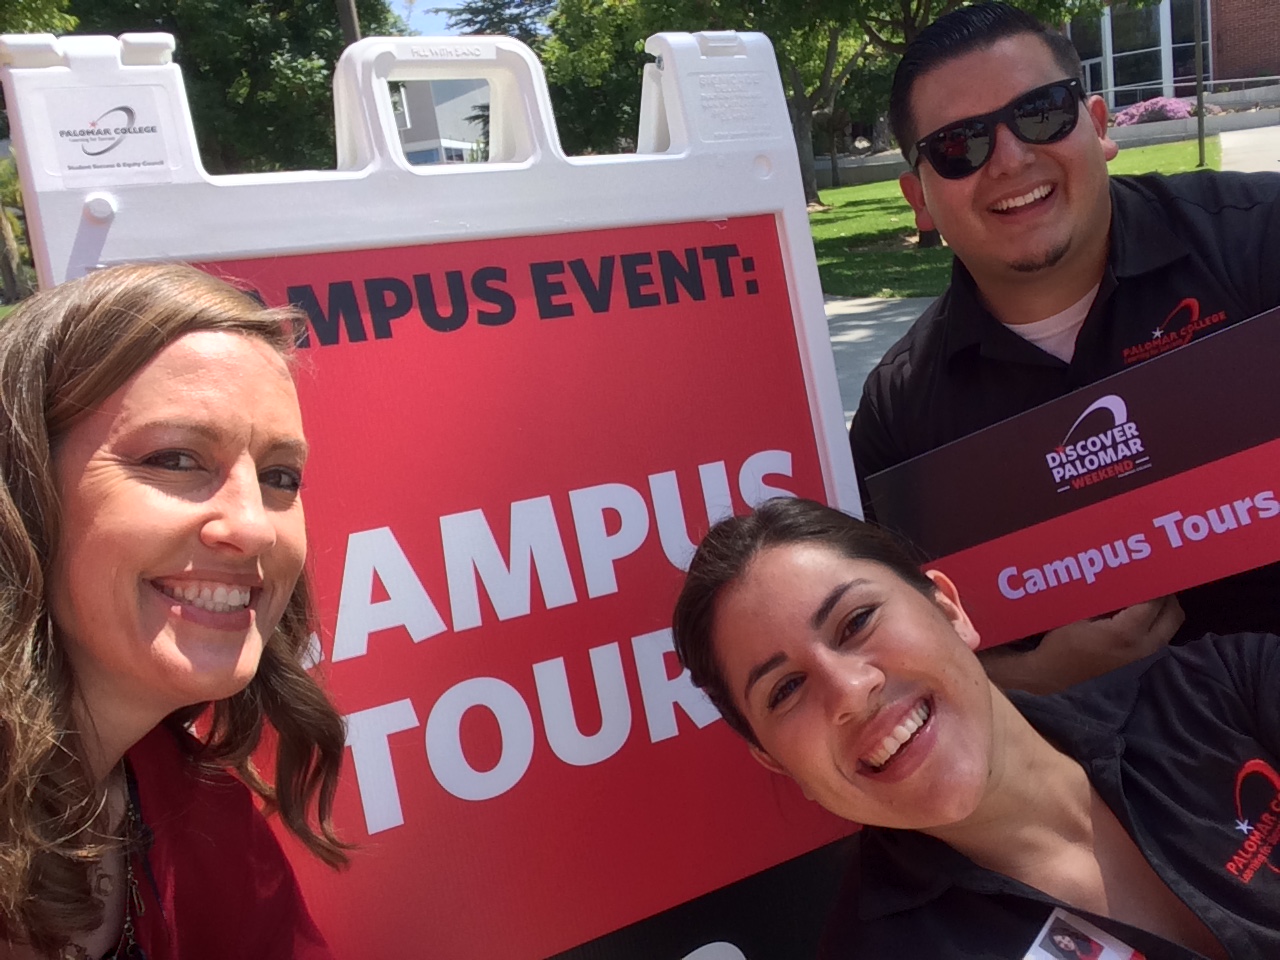 Tour guides at Campus Tour sign